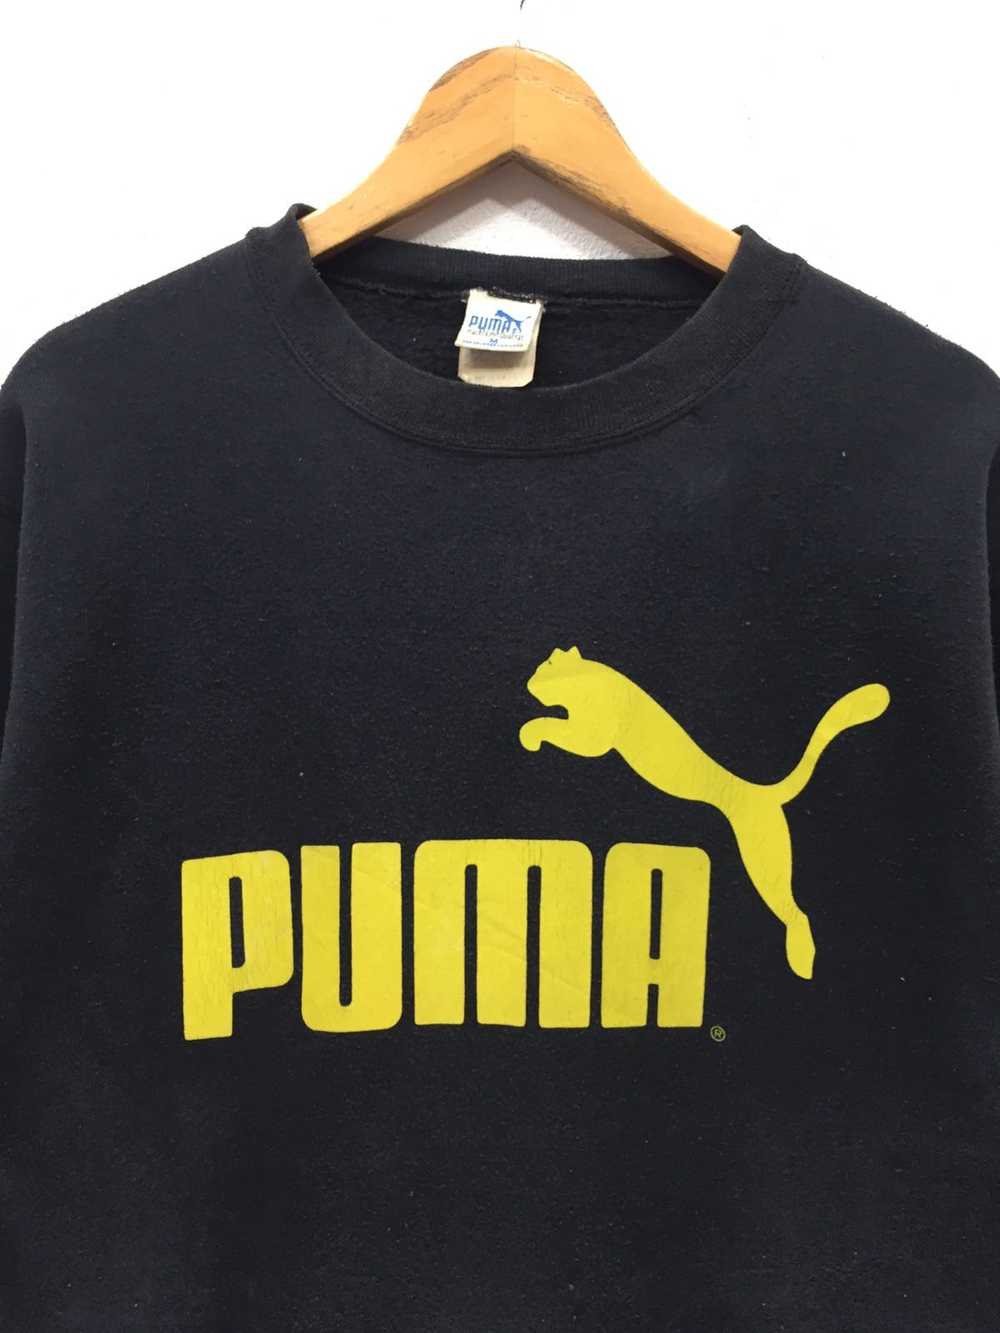 Vintage Puma Big Logo Sweatshirt - image 2